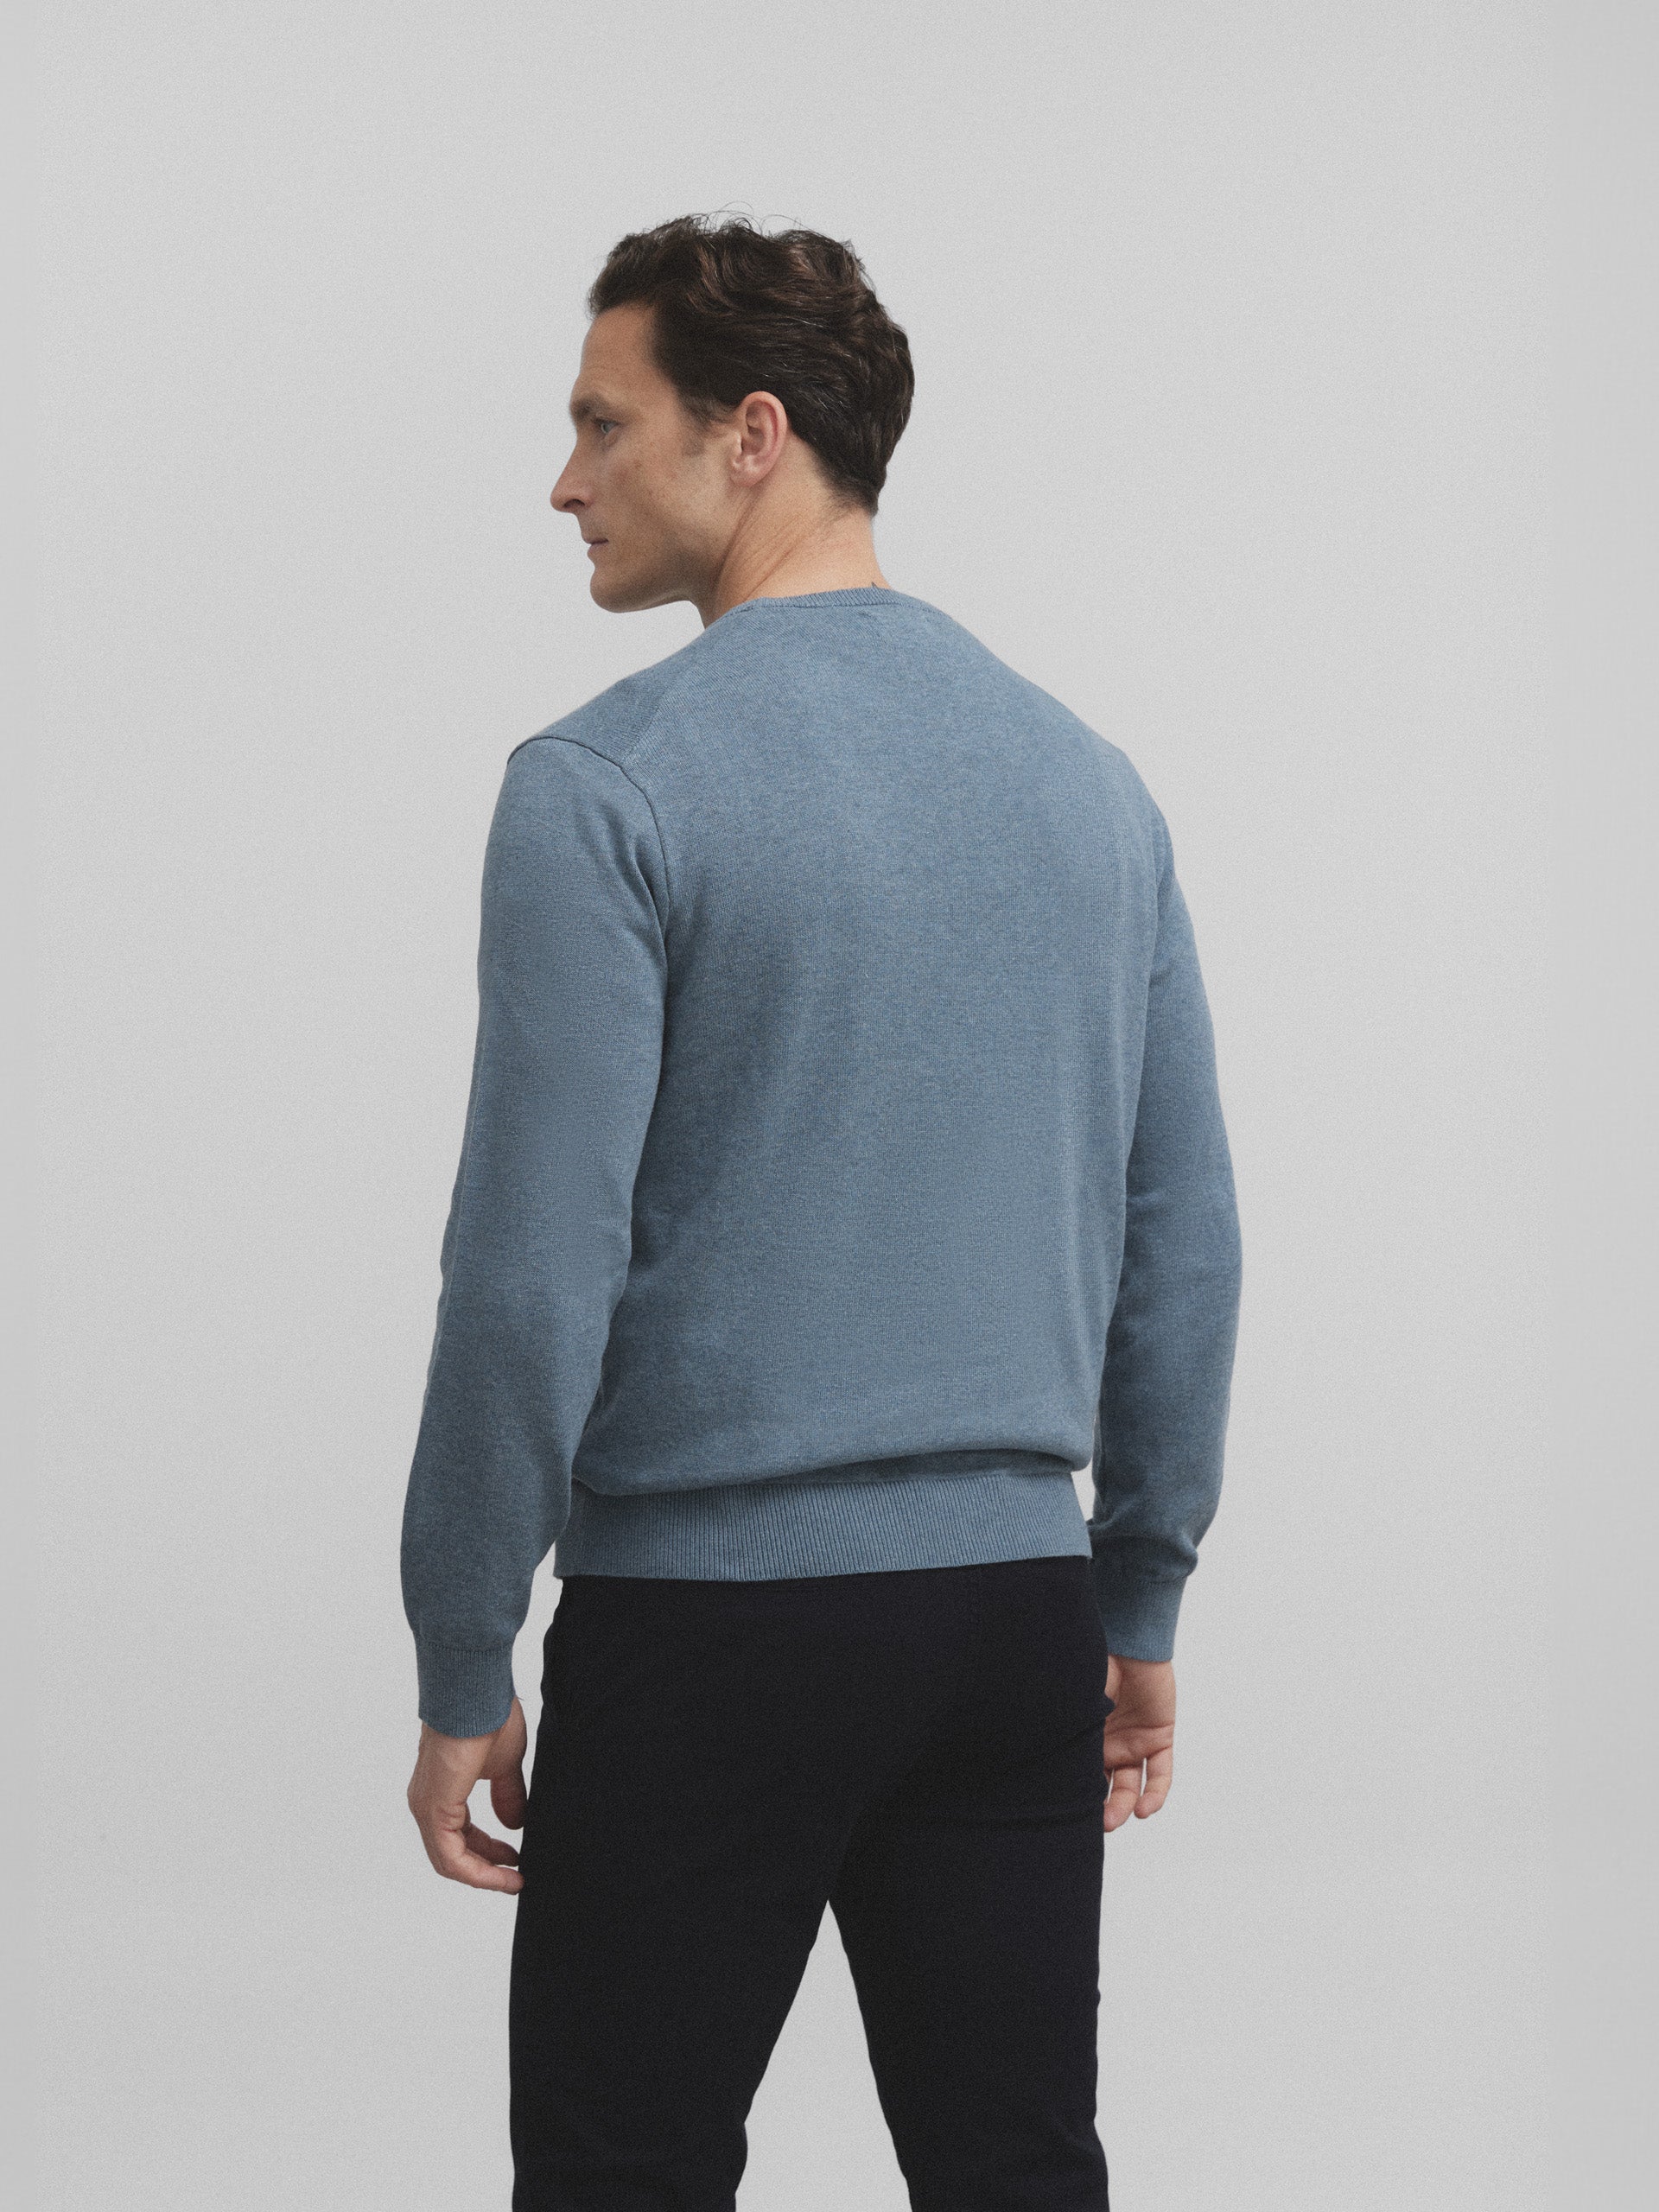 Gray blue round neck sweater